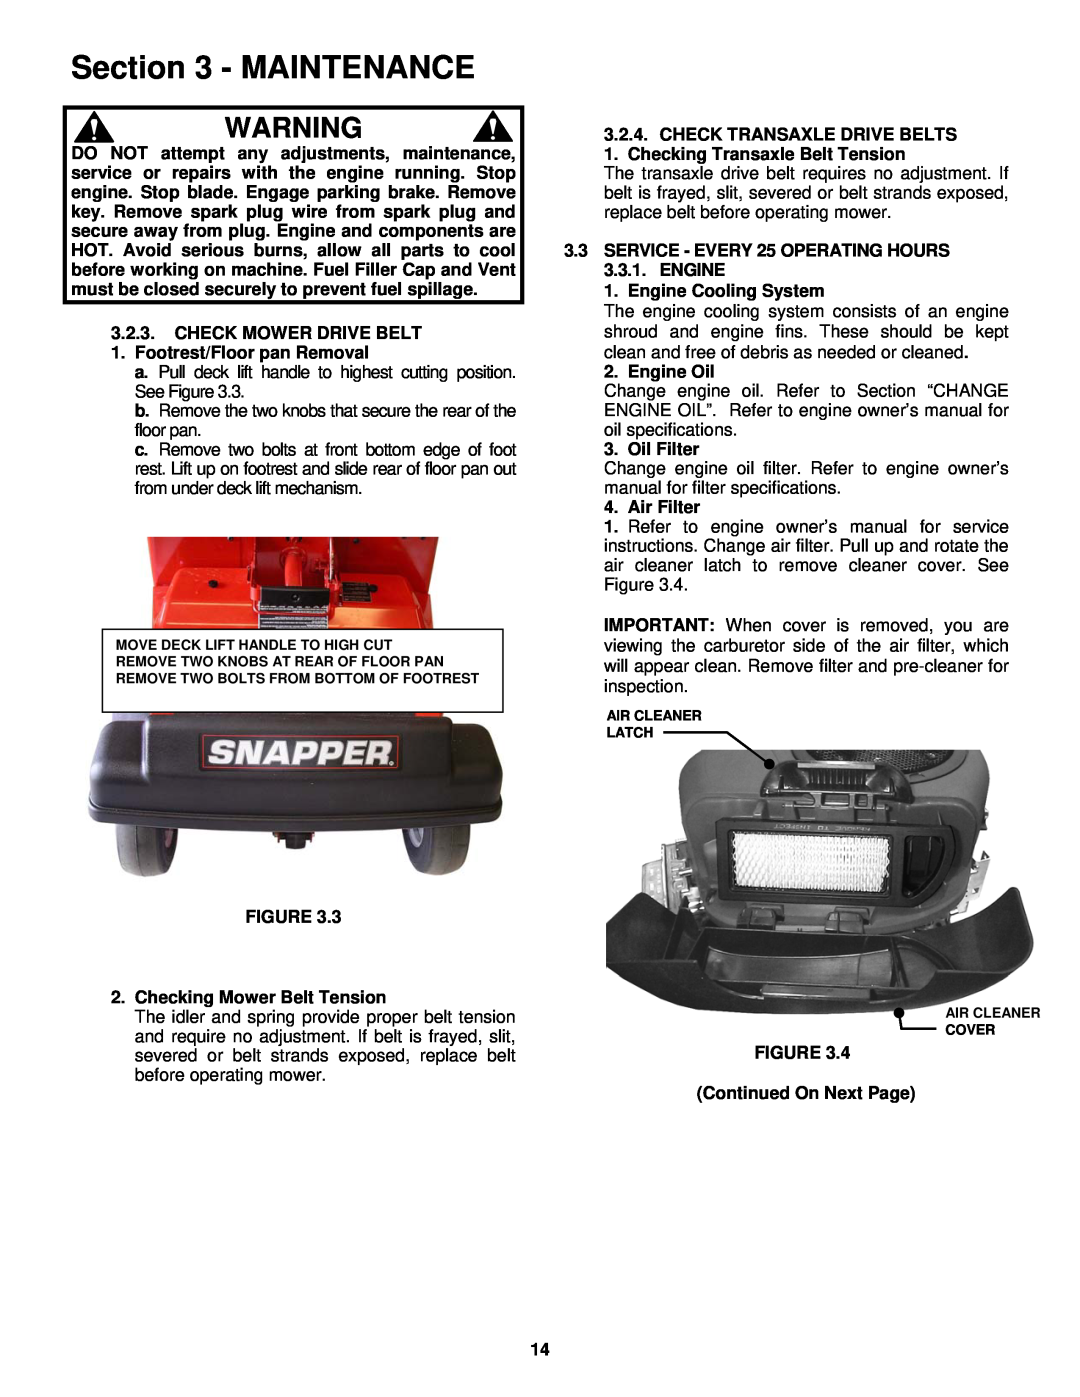 Snapper ESZT18336BVE important safety instructions Maintenance, CHECK MOWER DRIVE BELT 1. Footrest/Floor pan Removal 